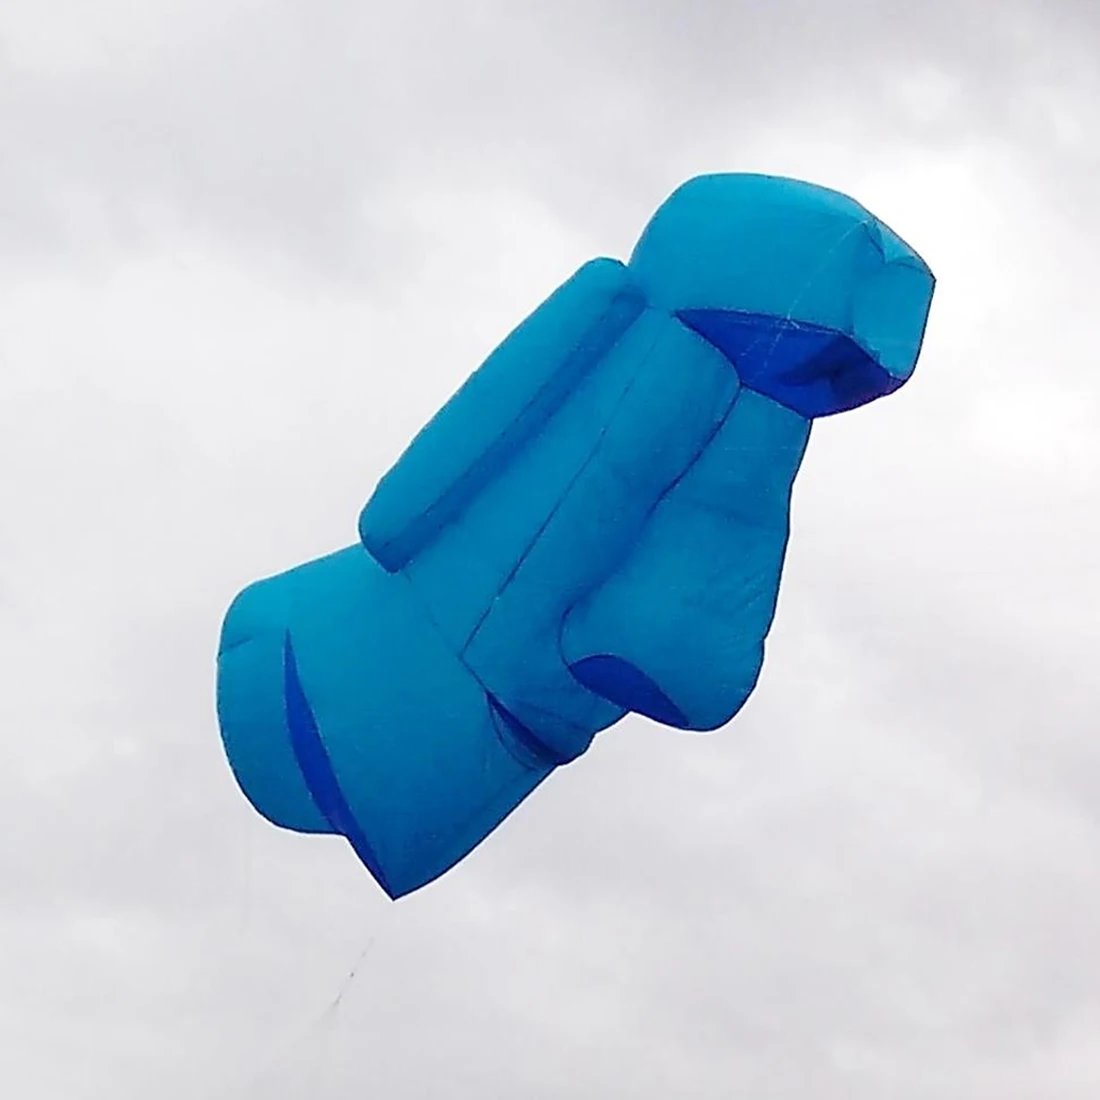 5m Easter Island Head Kite Line Laundry Kite Pendant Soft Inflatable Show Kite